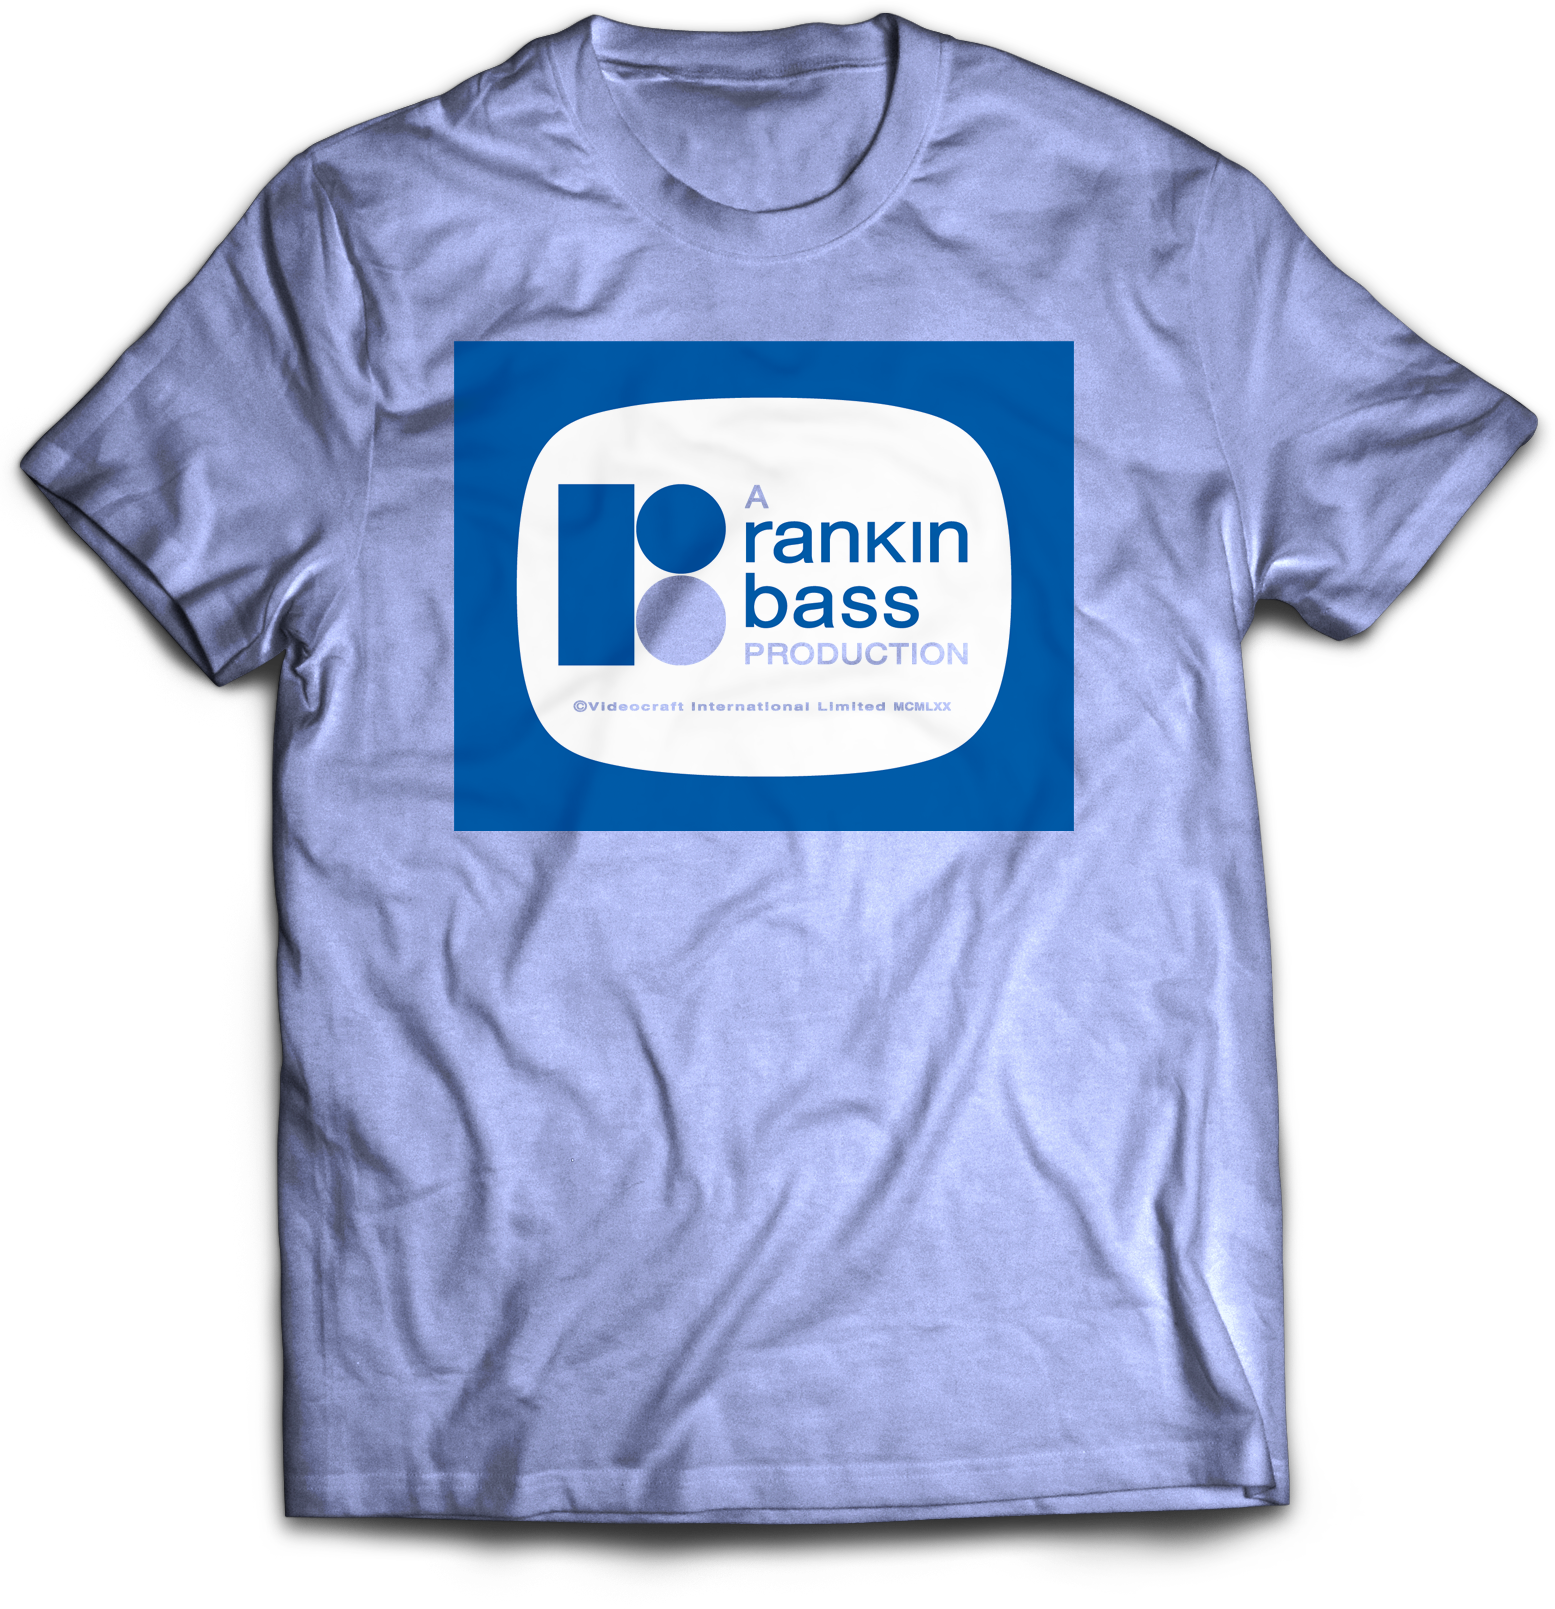 RANKIN / BASS LOGO T-SHIRT - BLUE